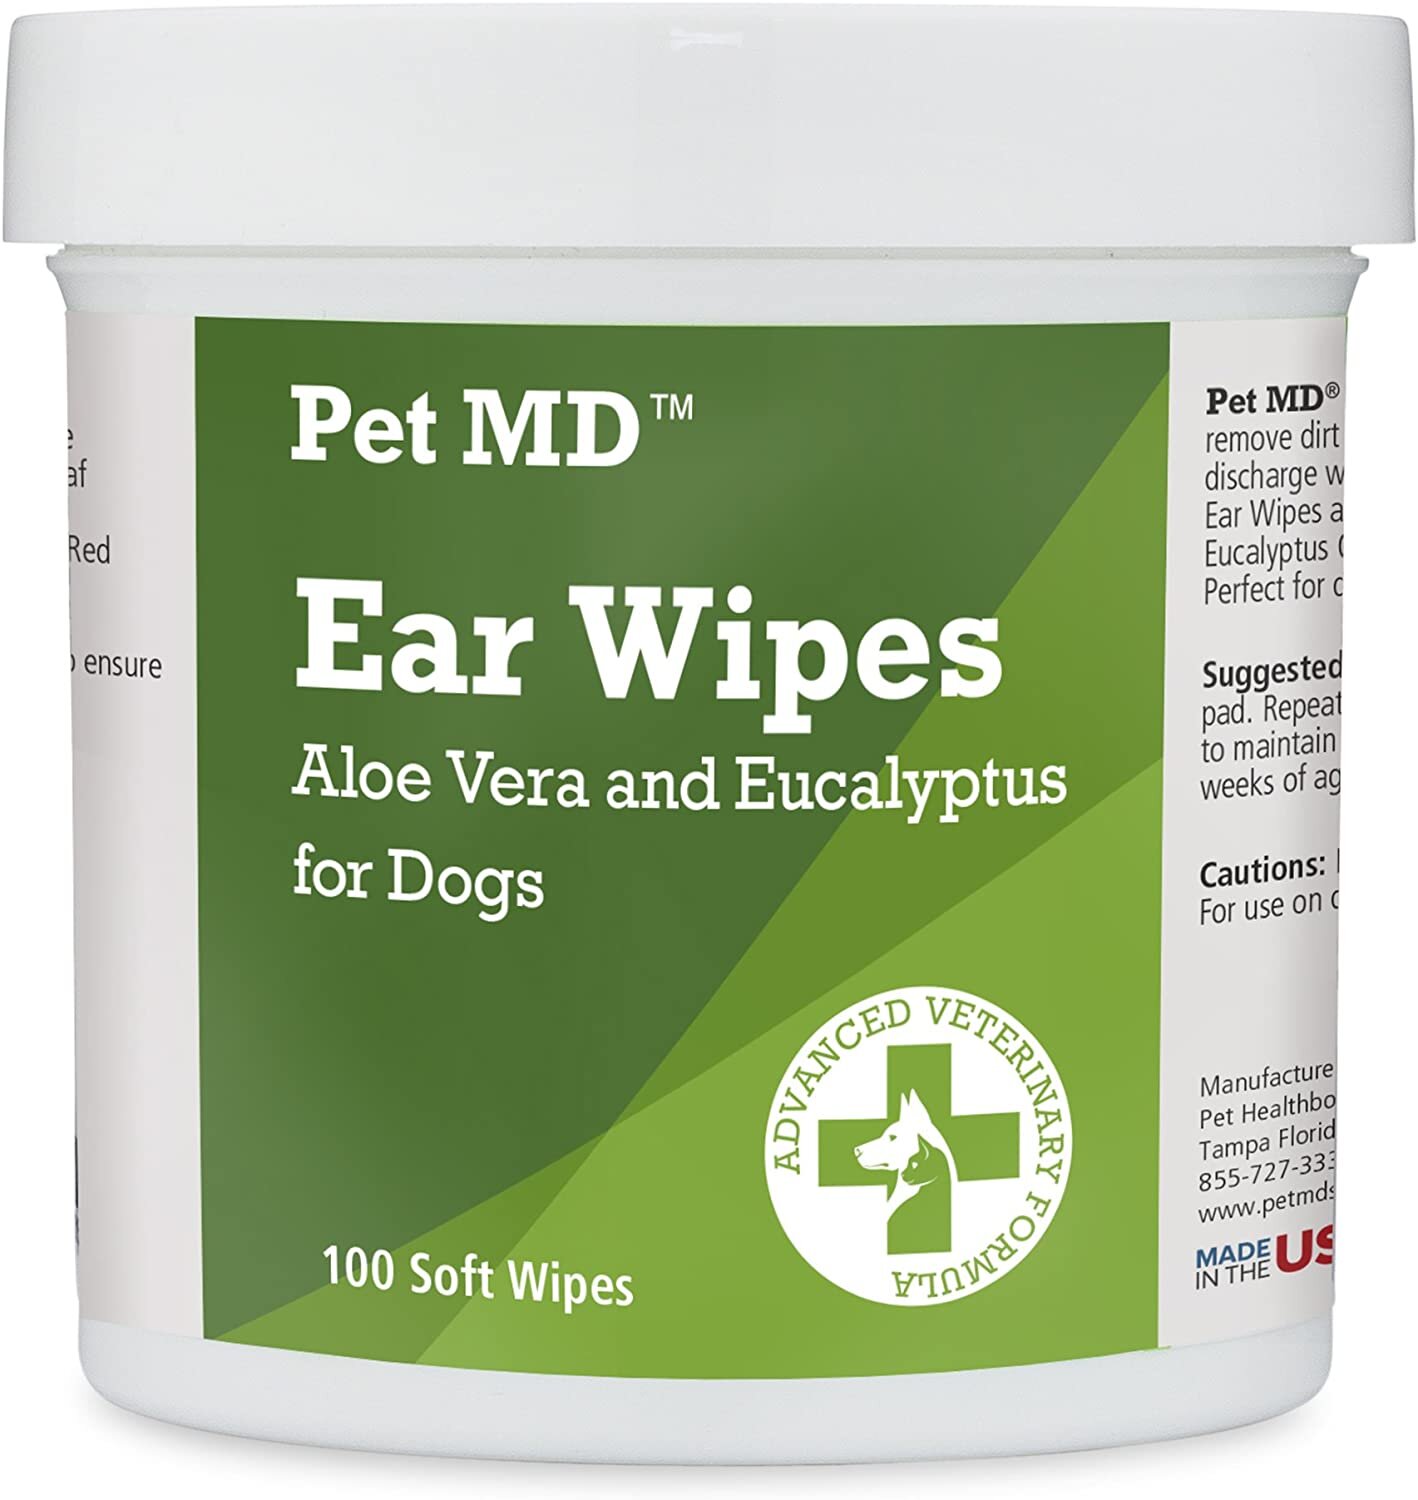 Dog ear wipes